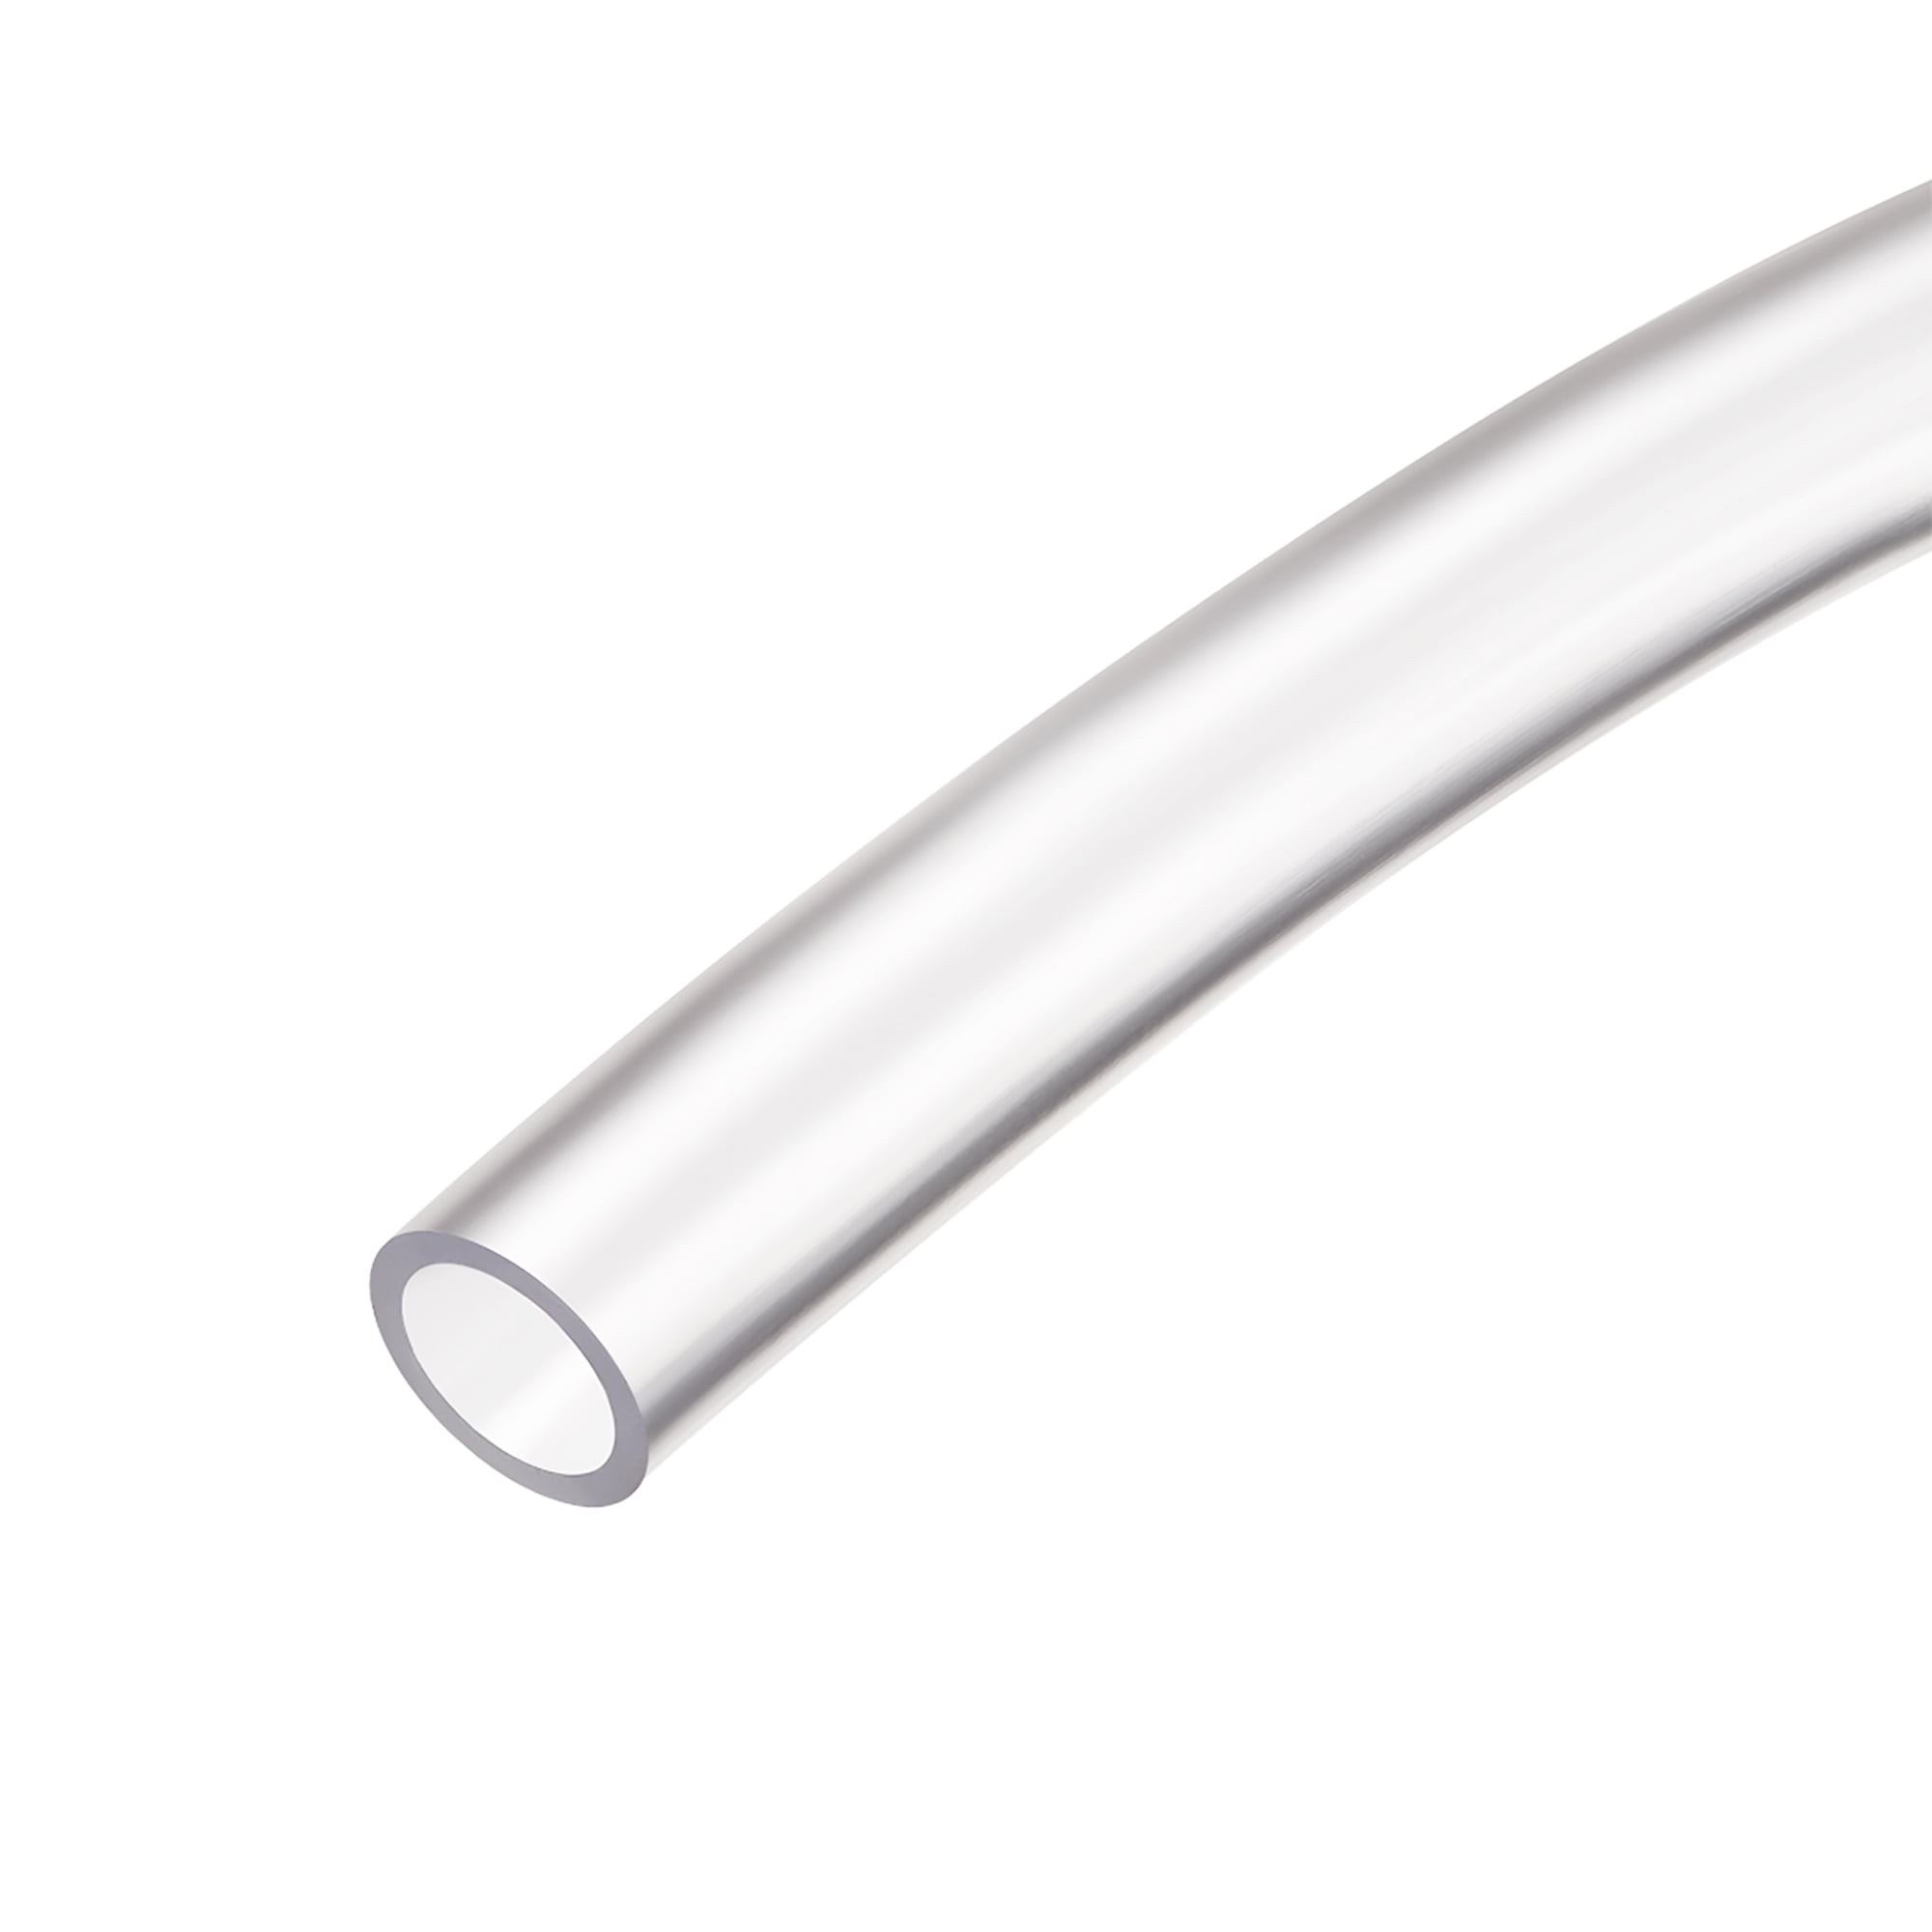 Clear Vinyl Tubing Flexible PVC Hose 1.5mm ID 2mm OD 10ft Plastic Tube 